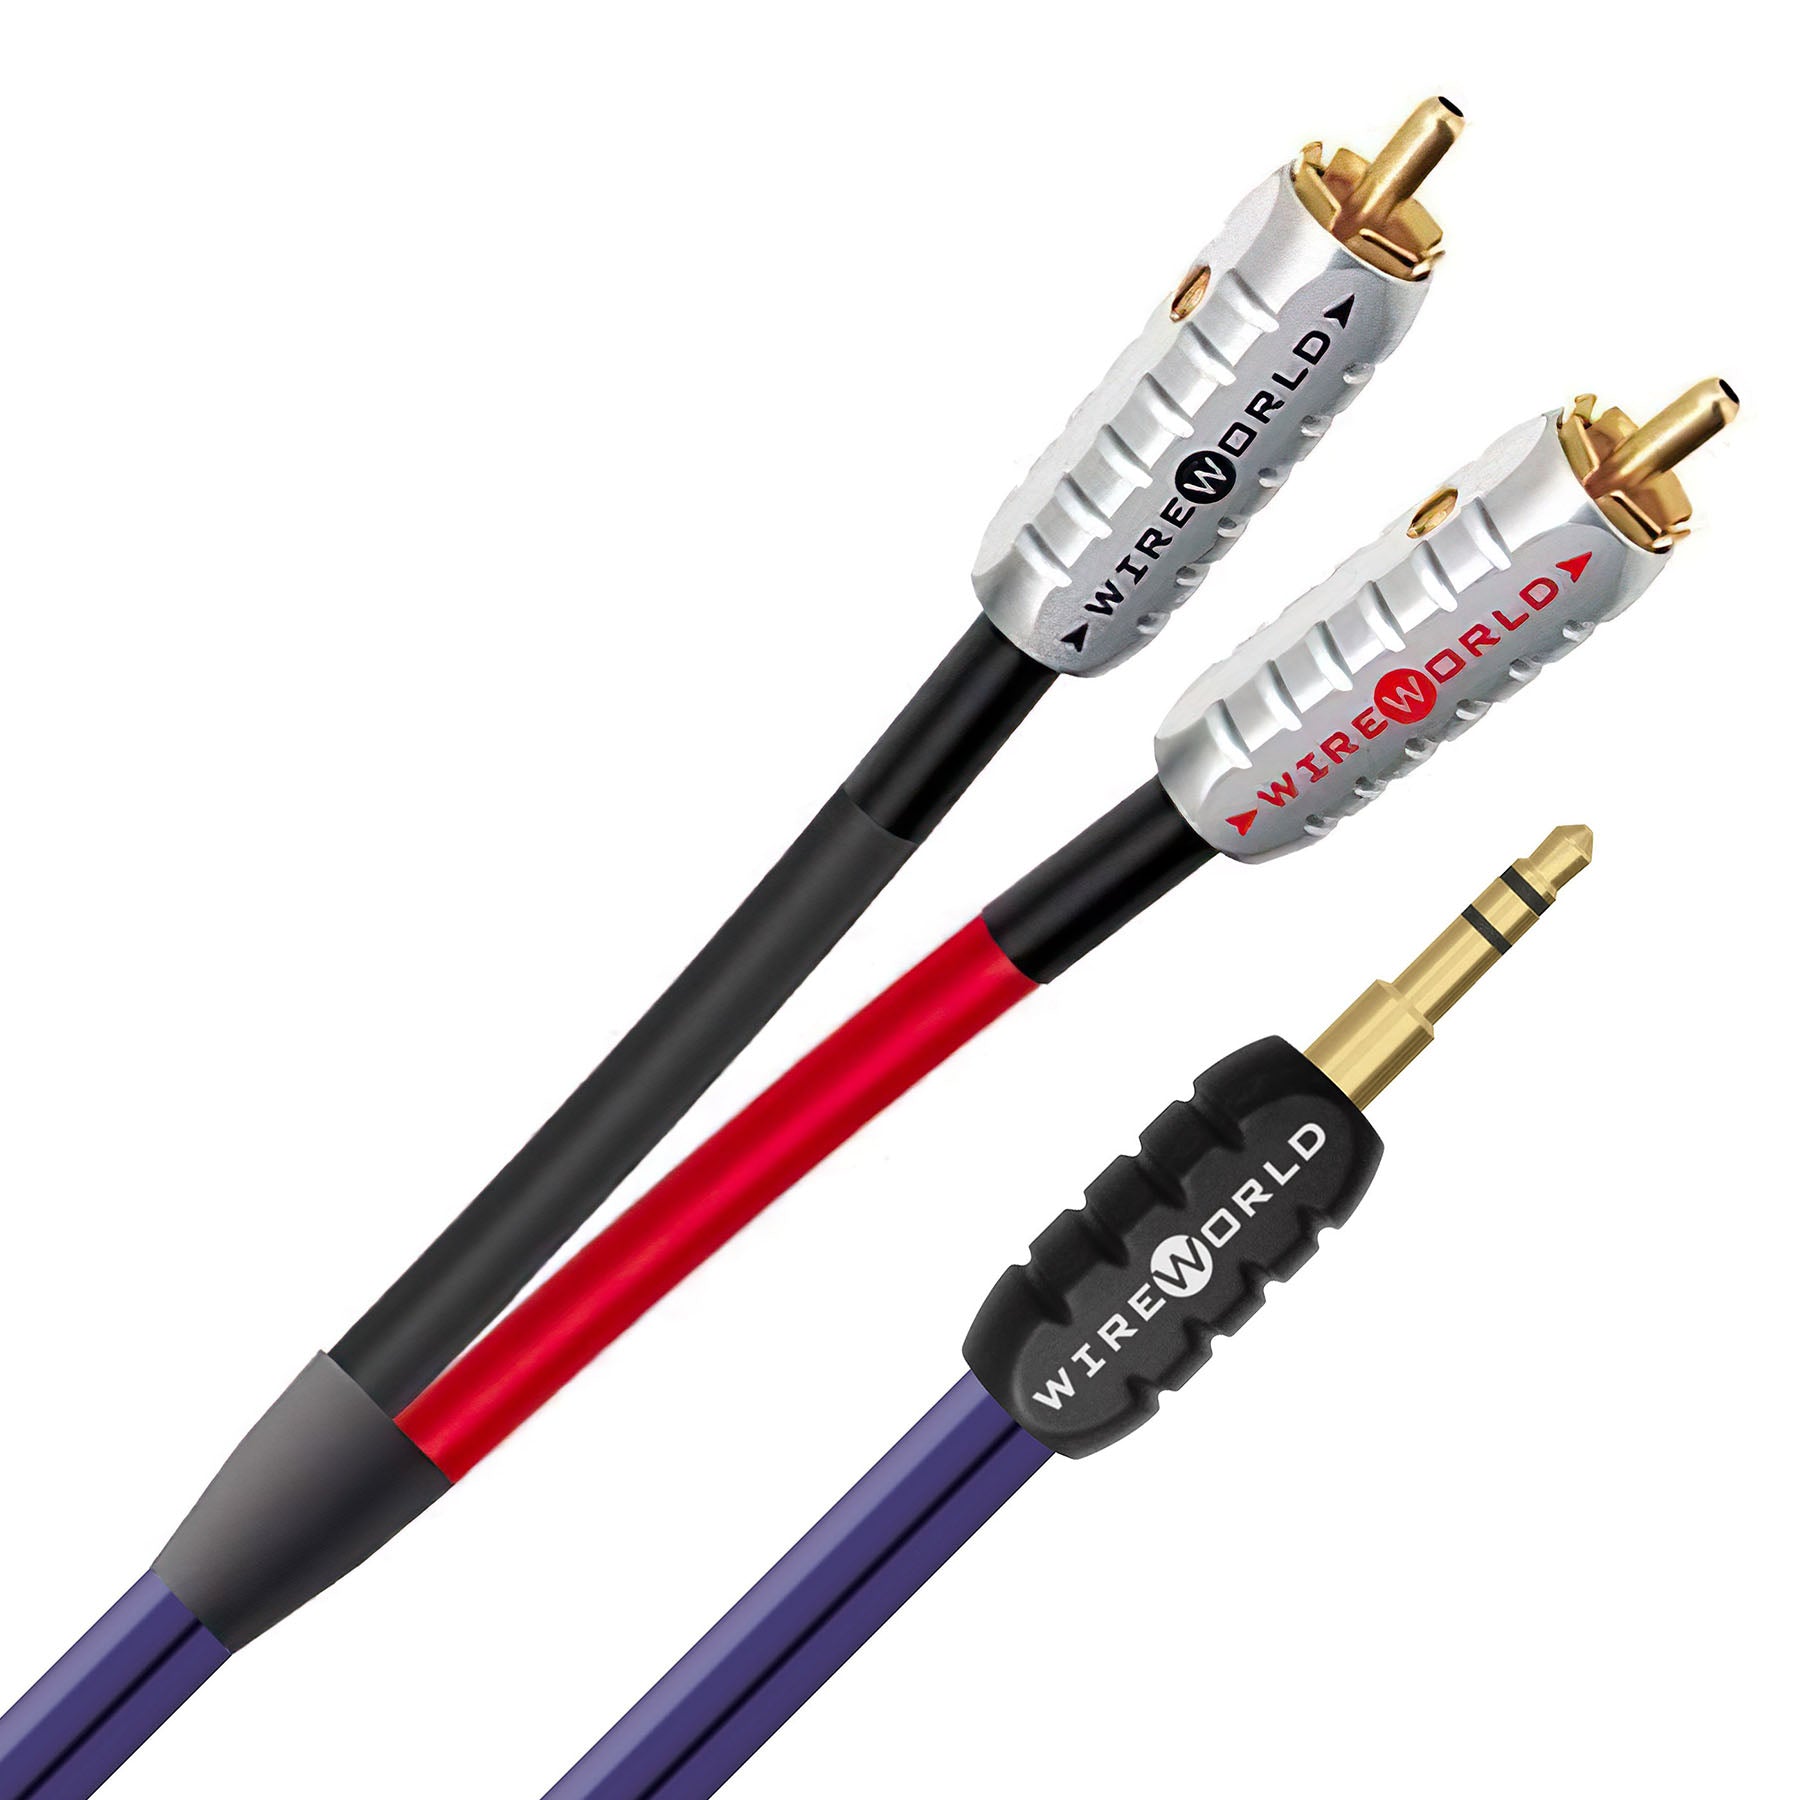 Inakustik Premium Phono Cable (0,75 m) - Câbles phono